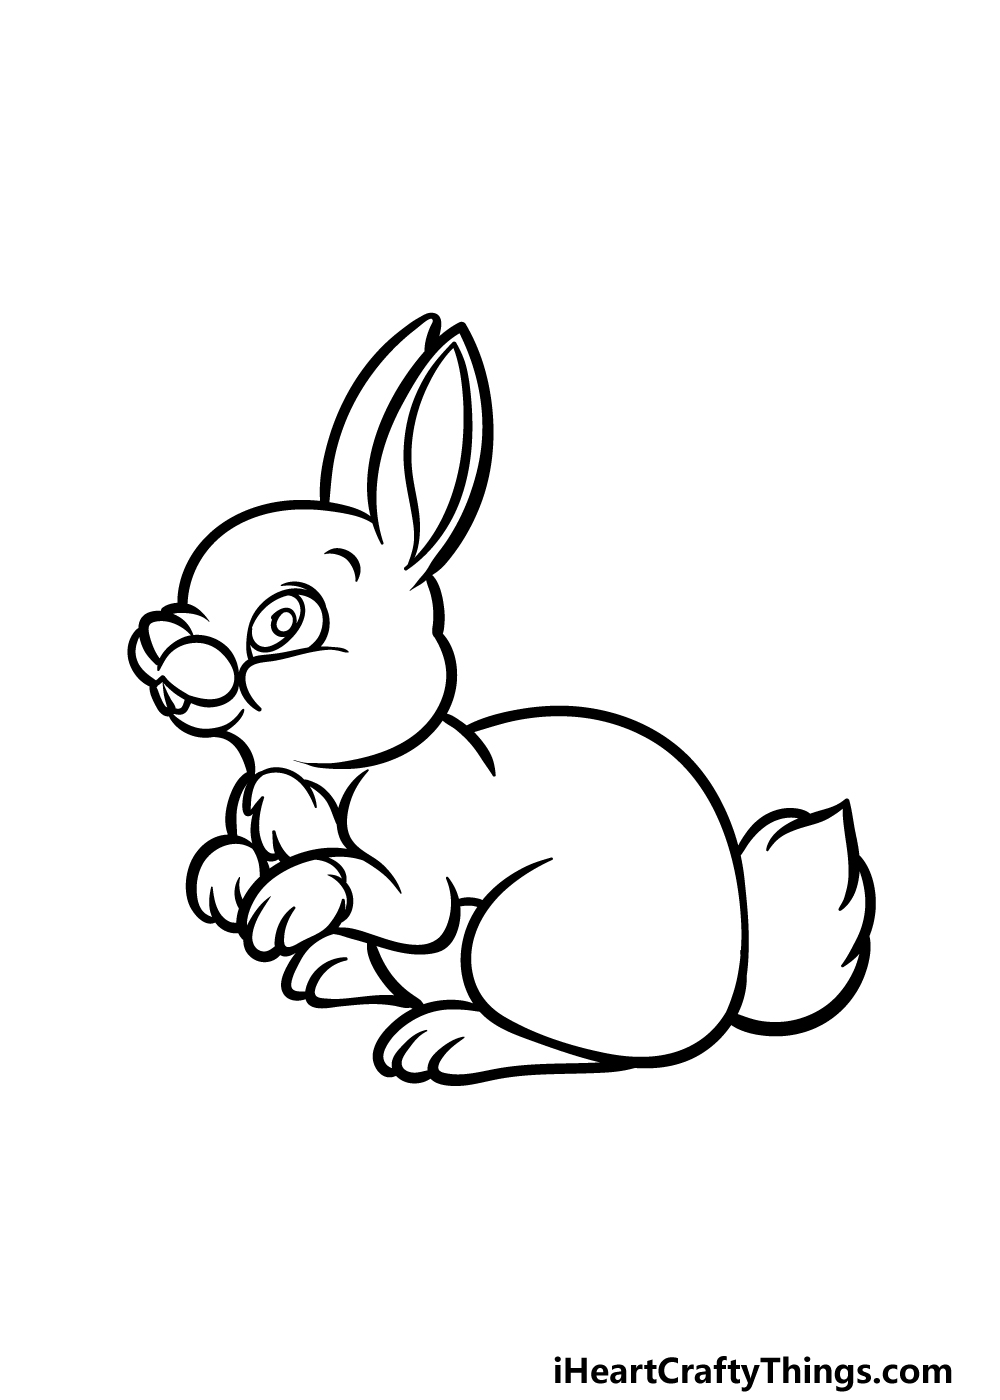 how to draw a cartoon rabbit step 5